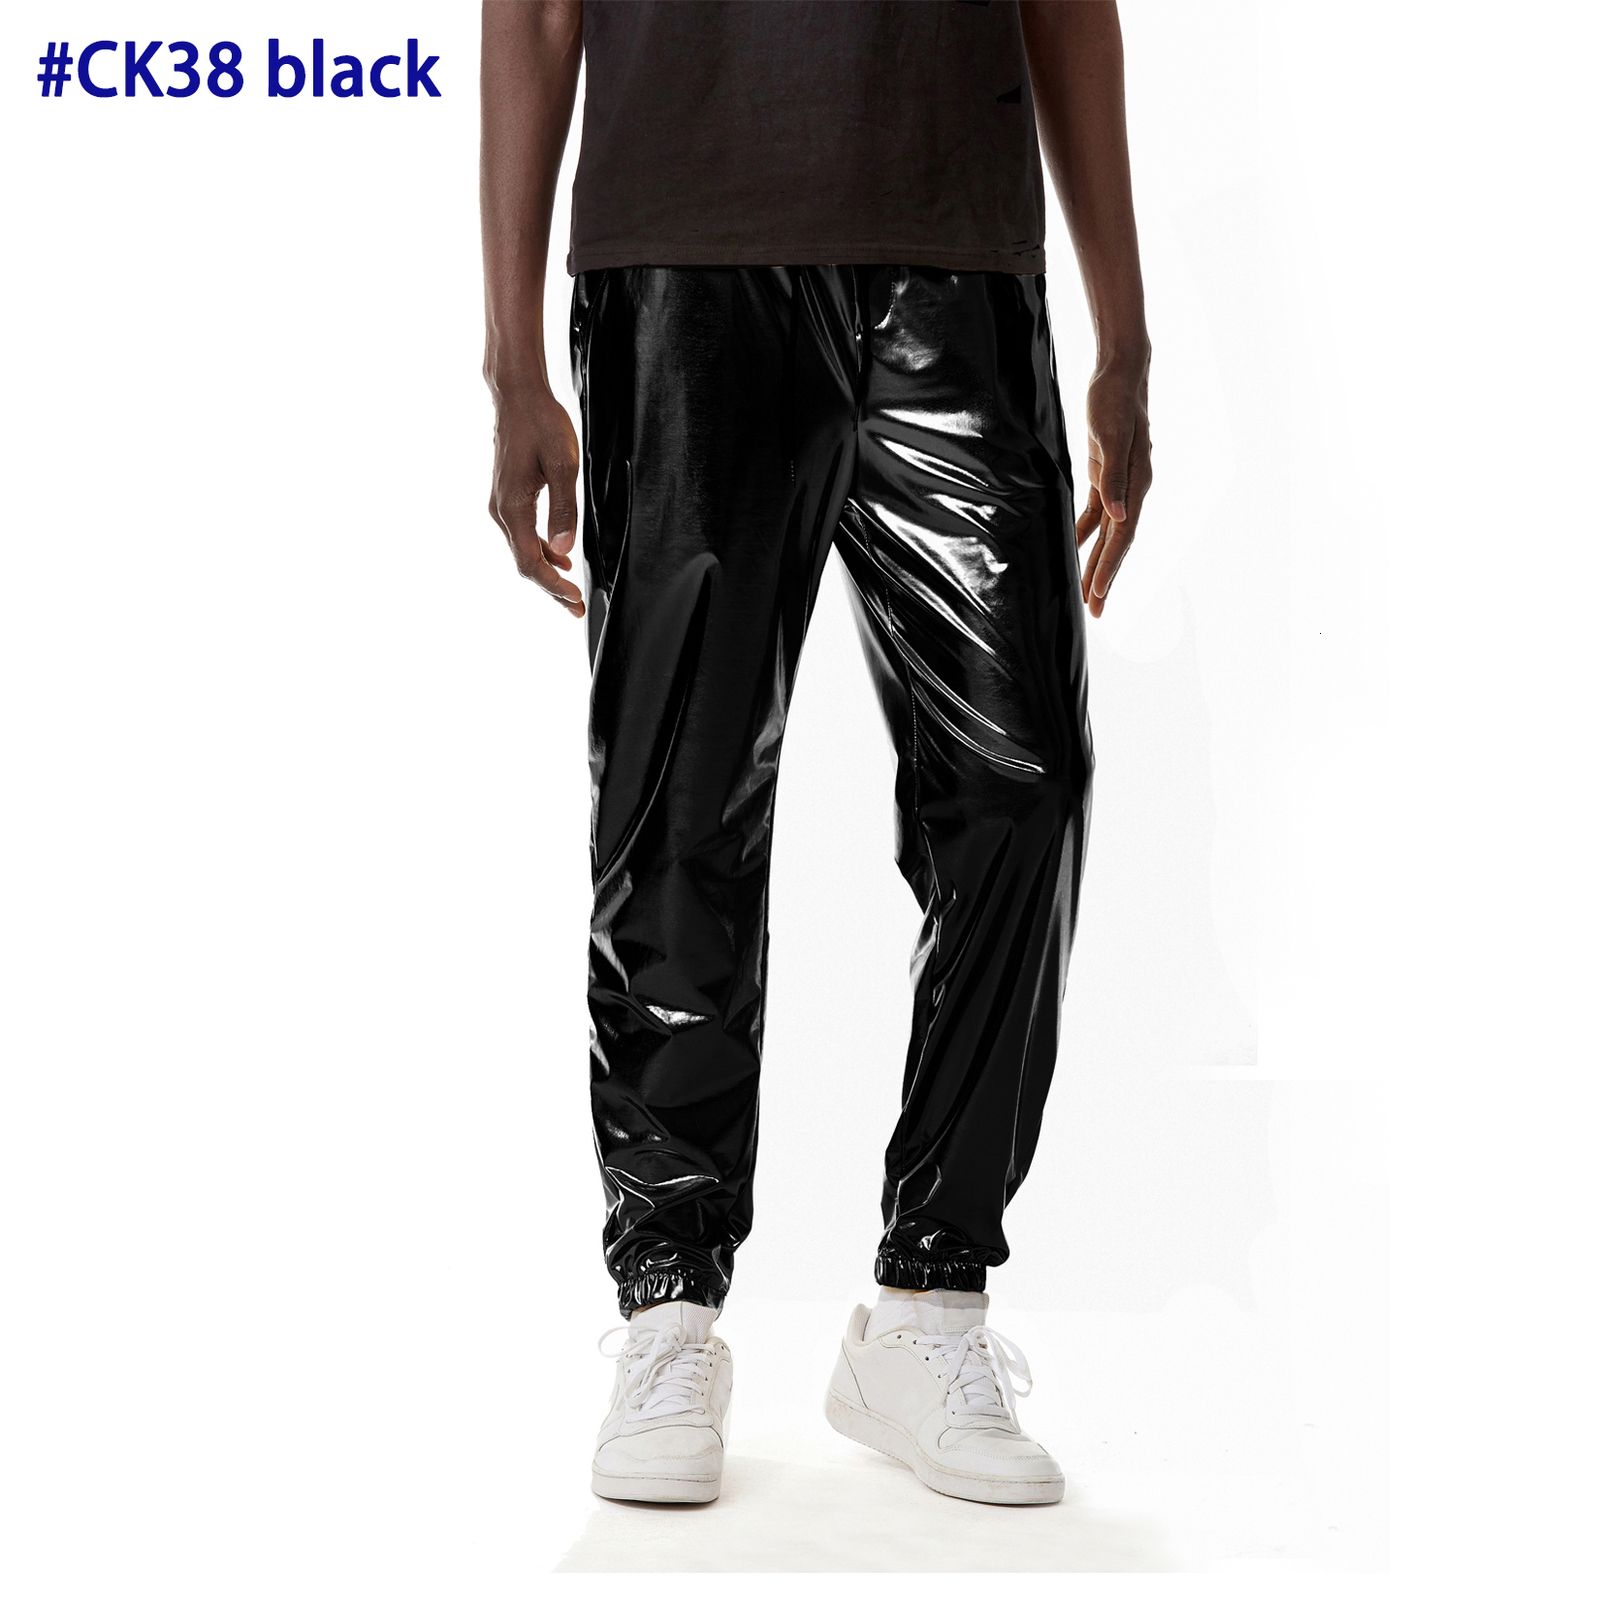 CK38 Black